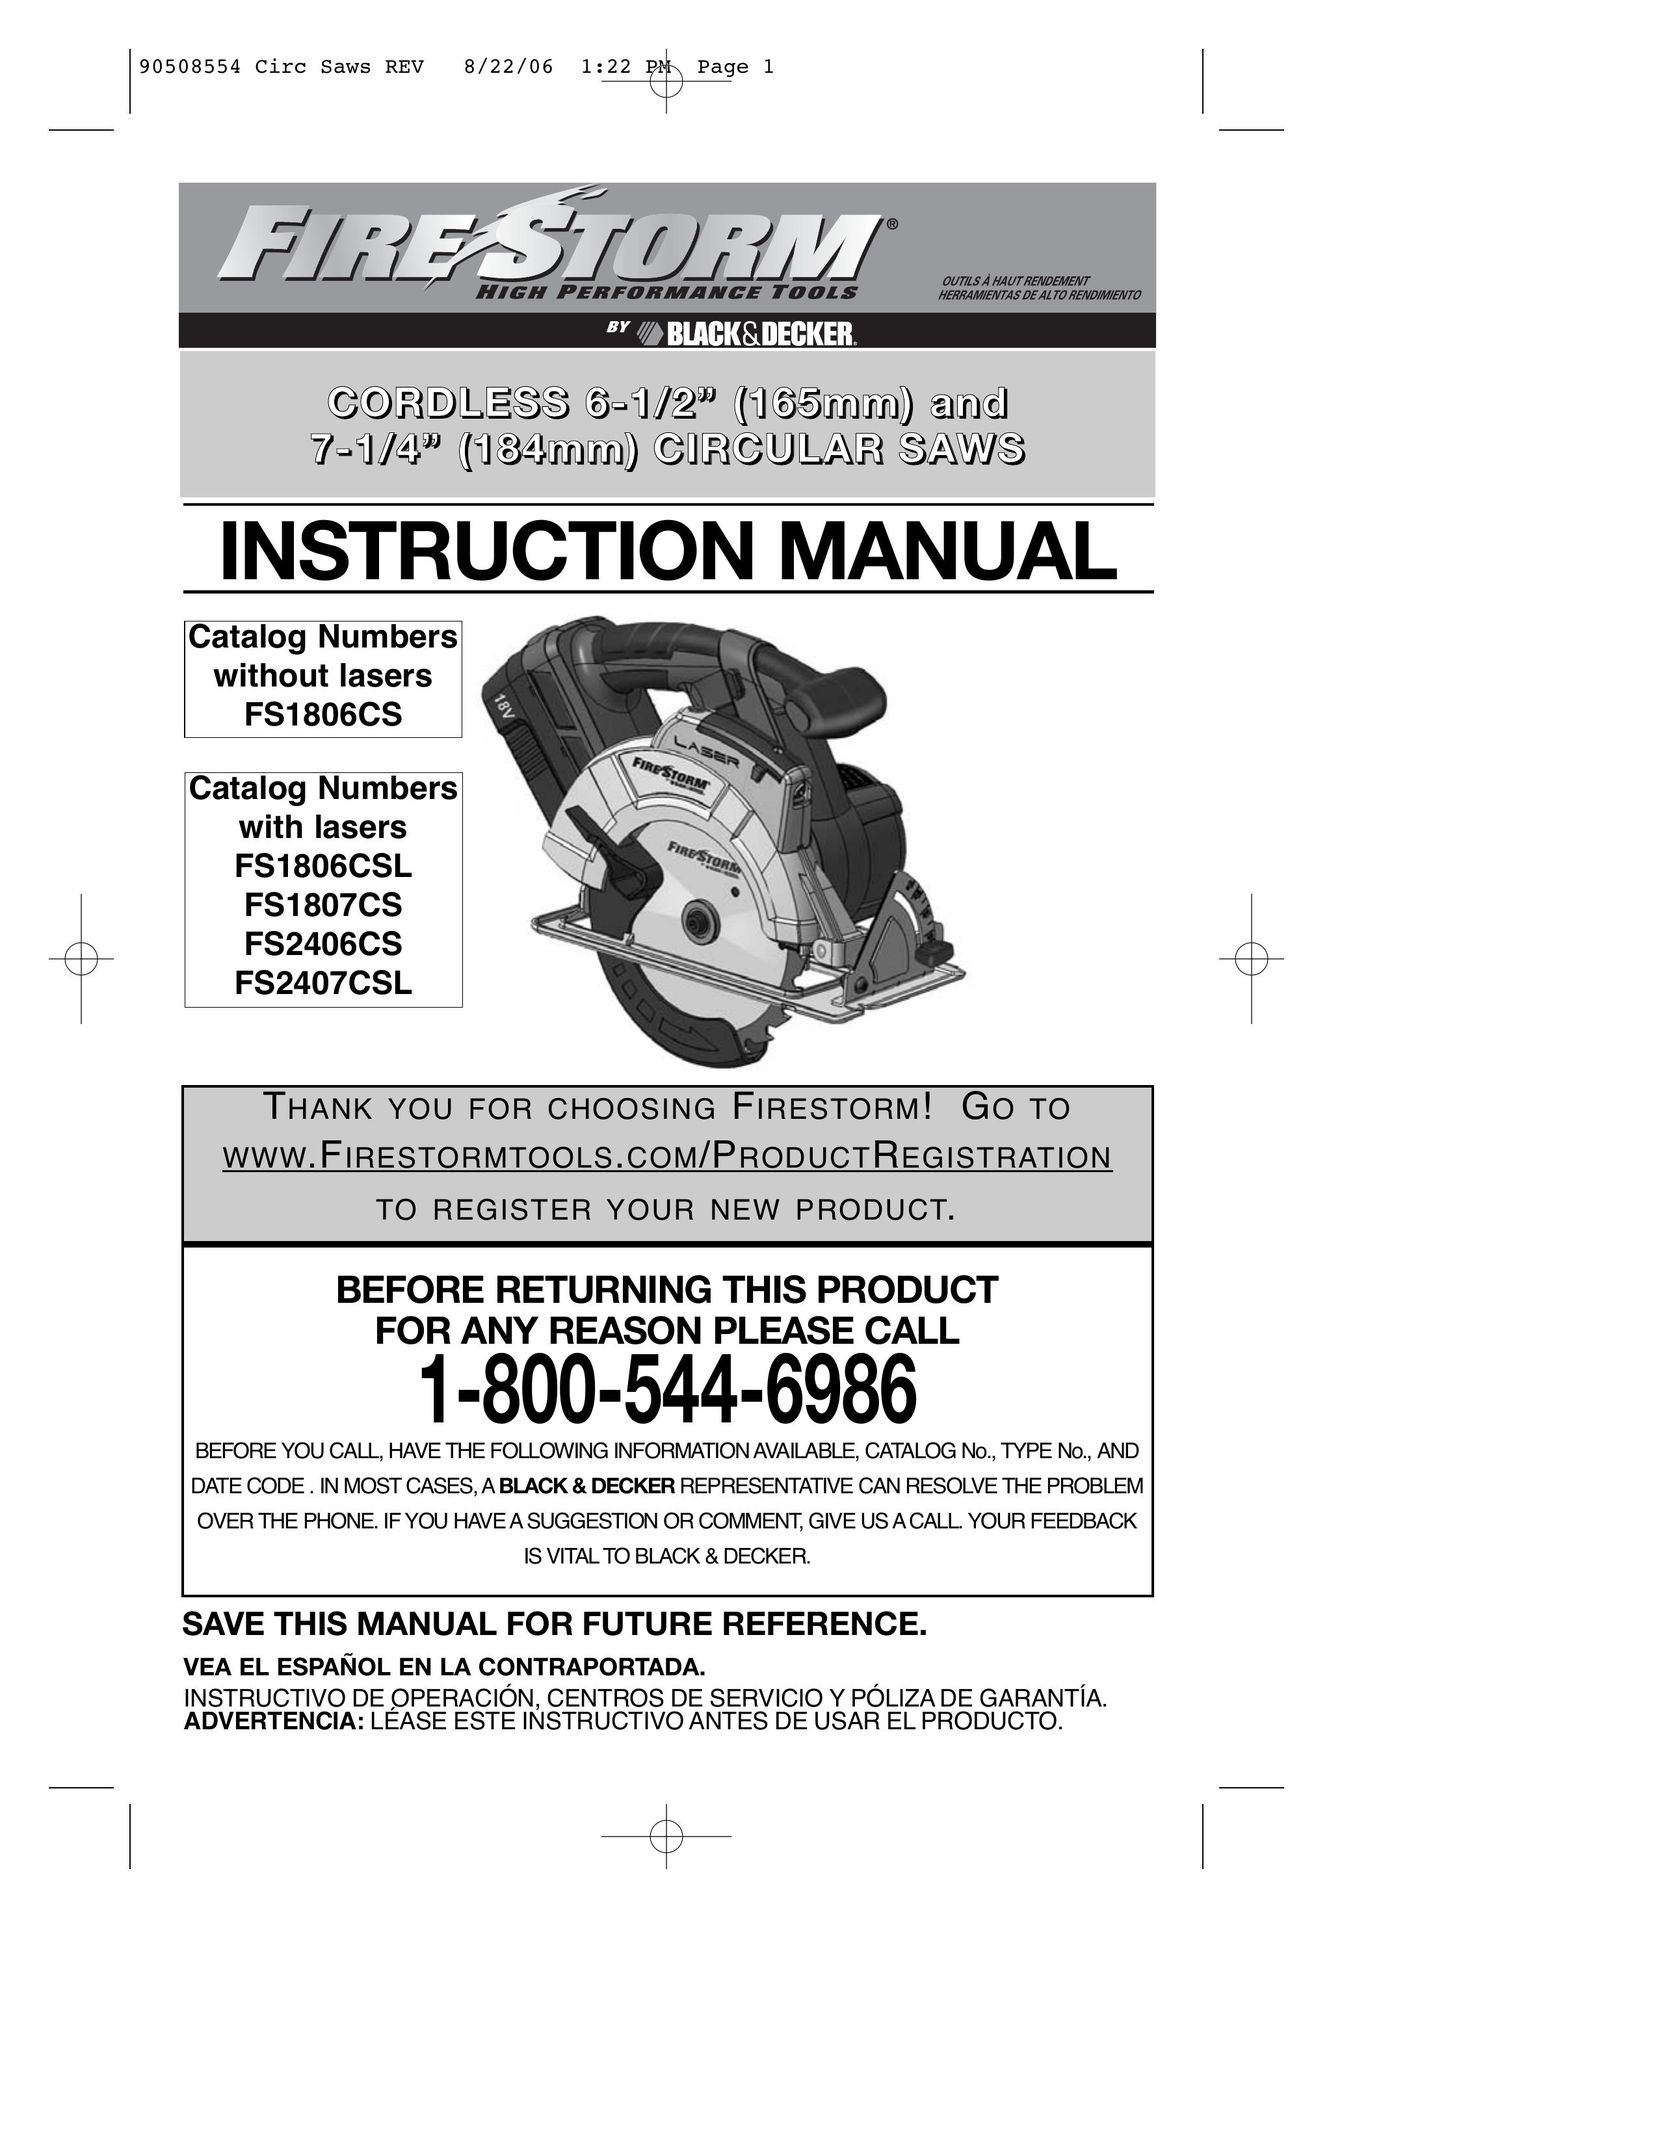 Black & Decker FS2406CS Cordless Saw User Manual